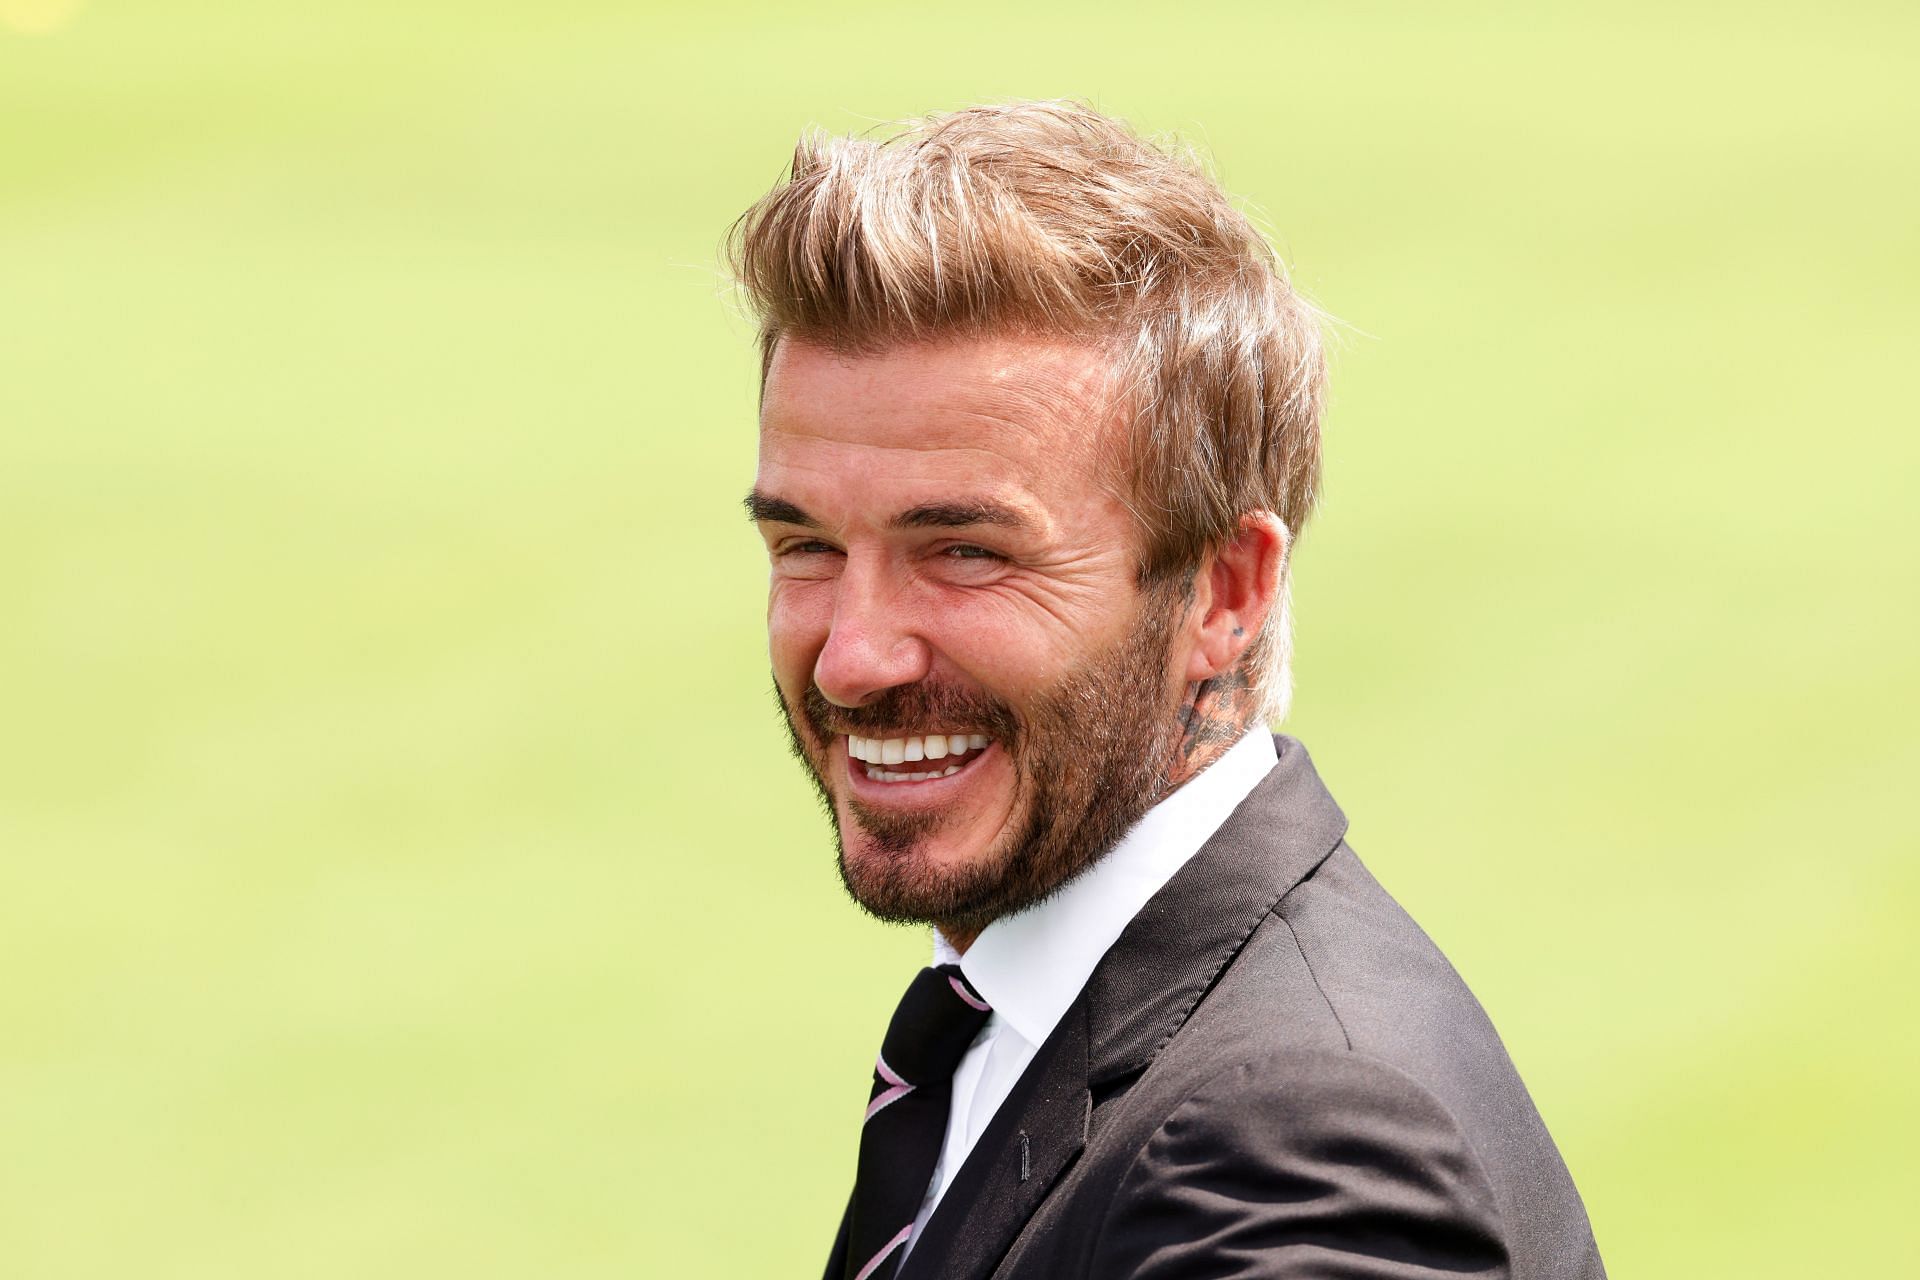 David Beckham remains a popular figure even after retirement